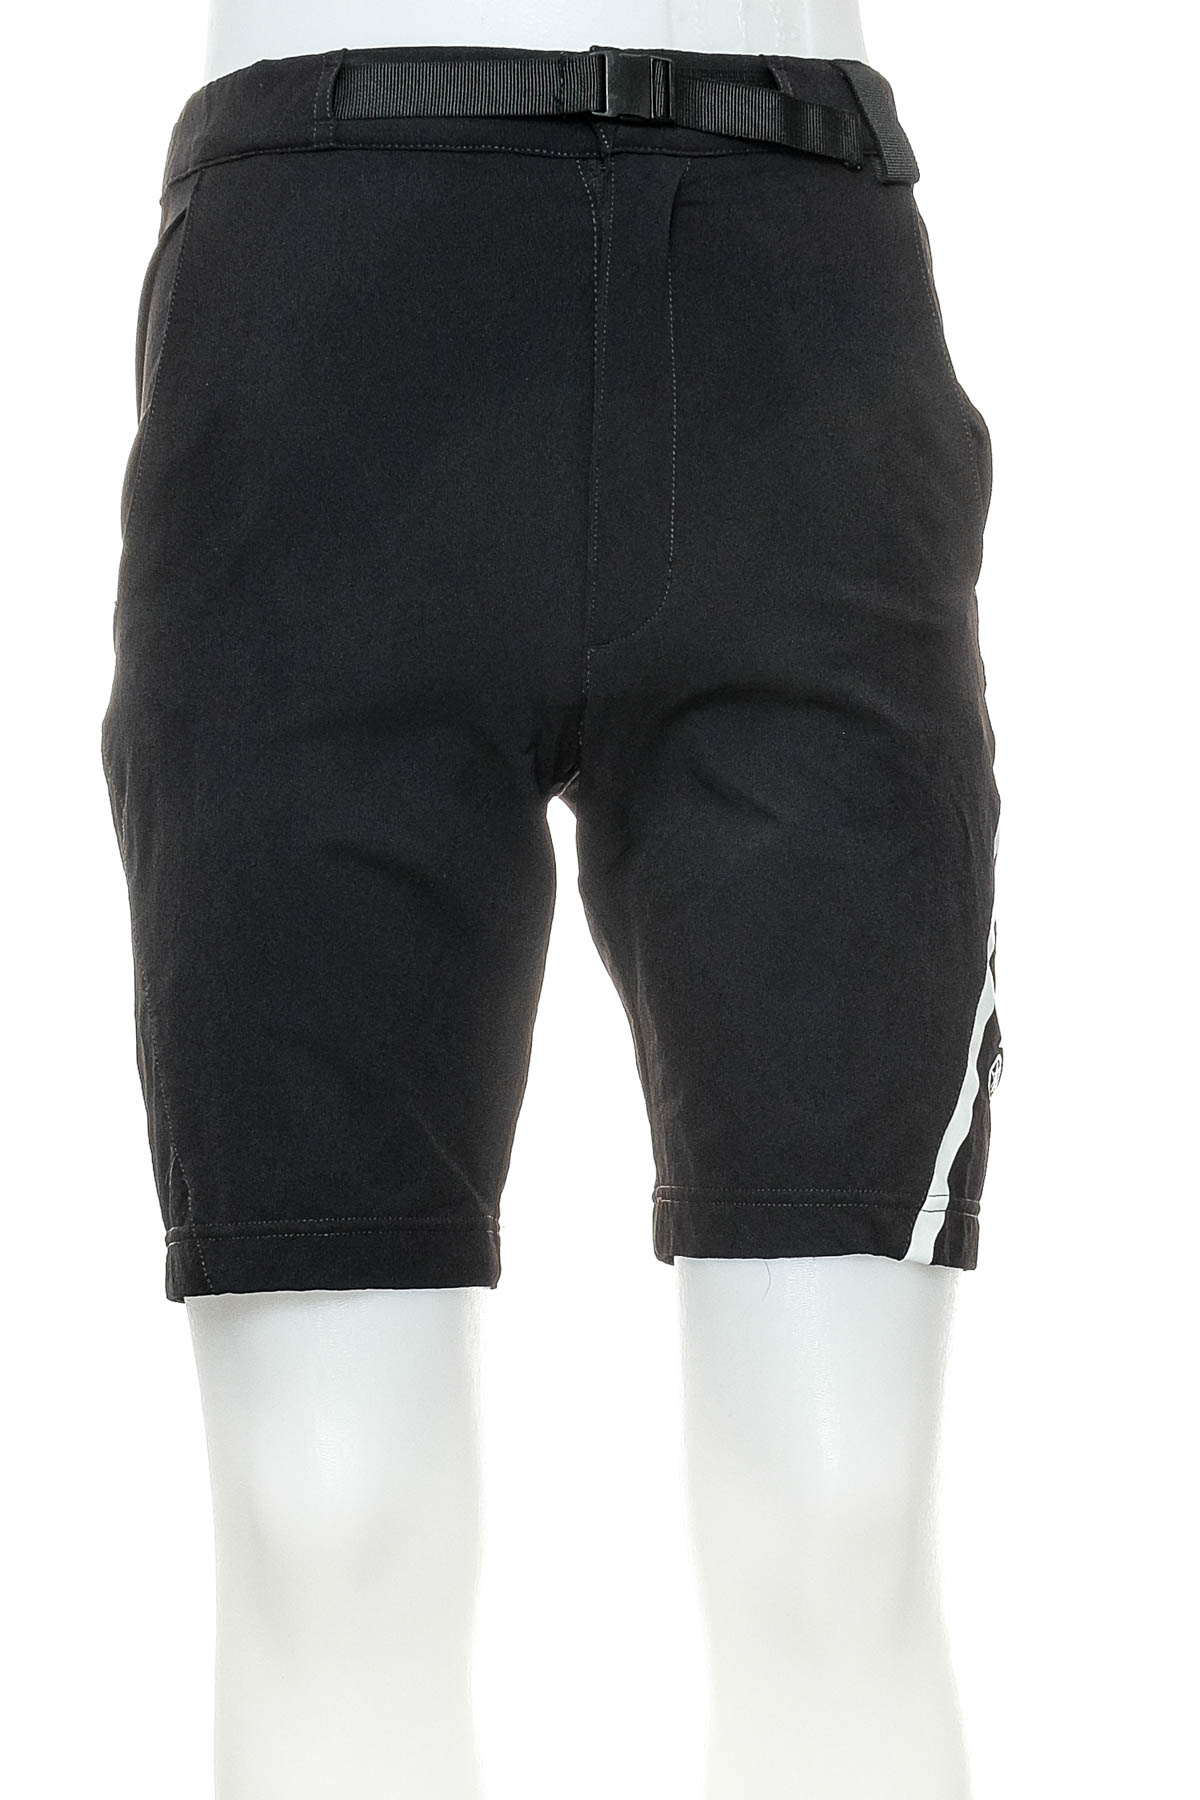 Men's shorts - Yamaha - 0